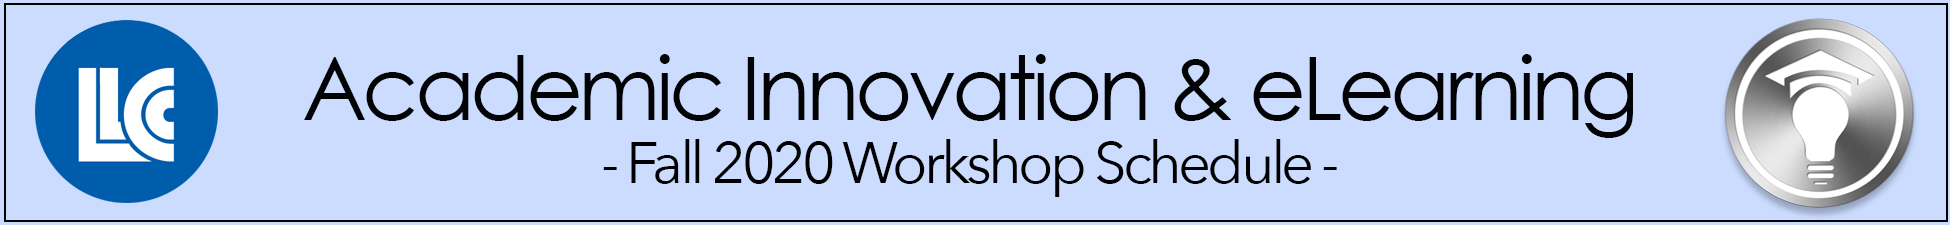 LLCC Academic Innovation & eLearning Fall 2020 Workshop Schedule